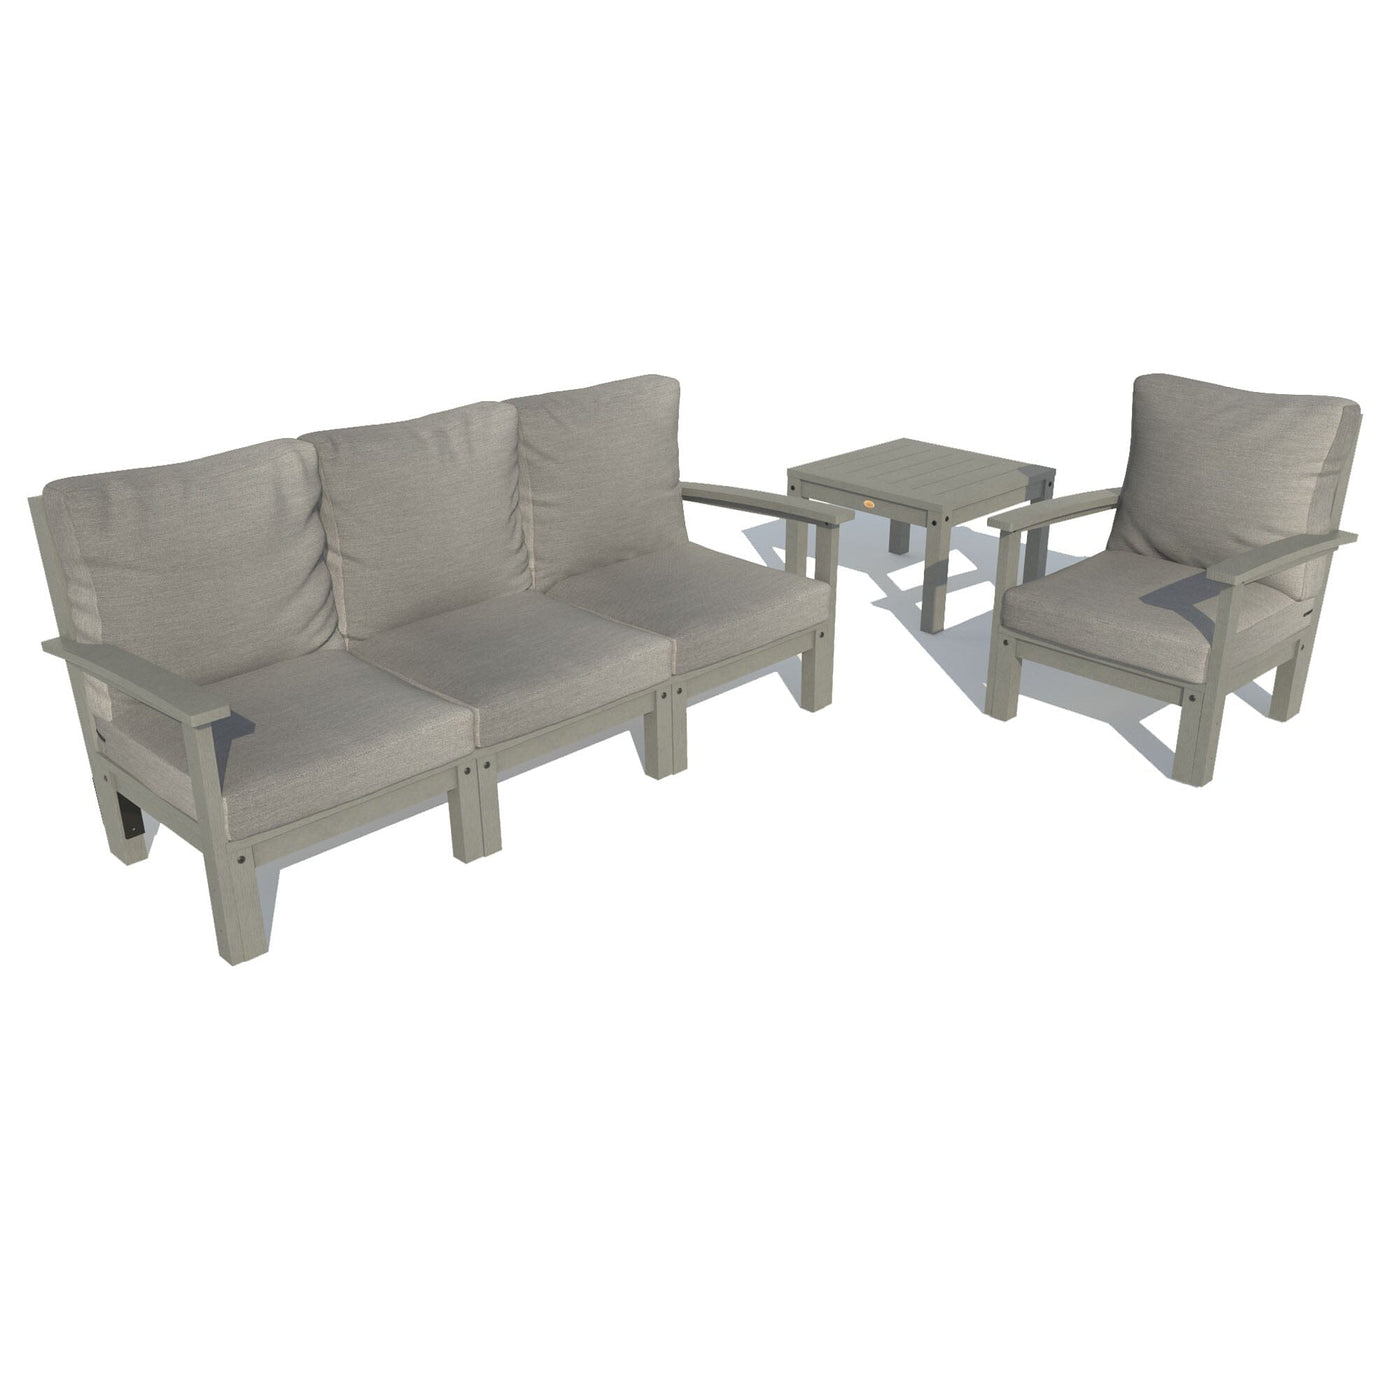 Bespoke Deep Seating: Sofa, Chair, and Side Table Deep Seating Highwood USA Stone Gray Coastal Teak 